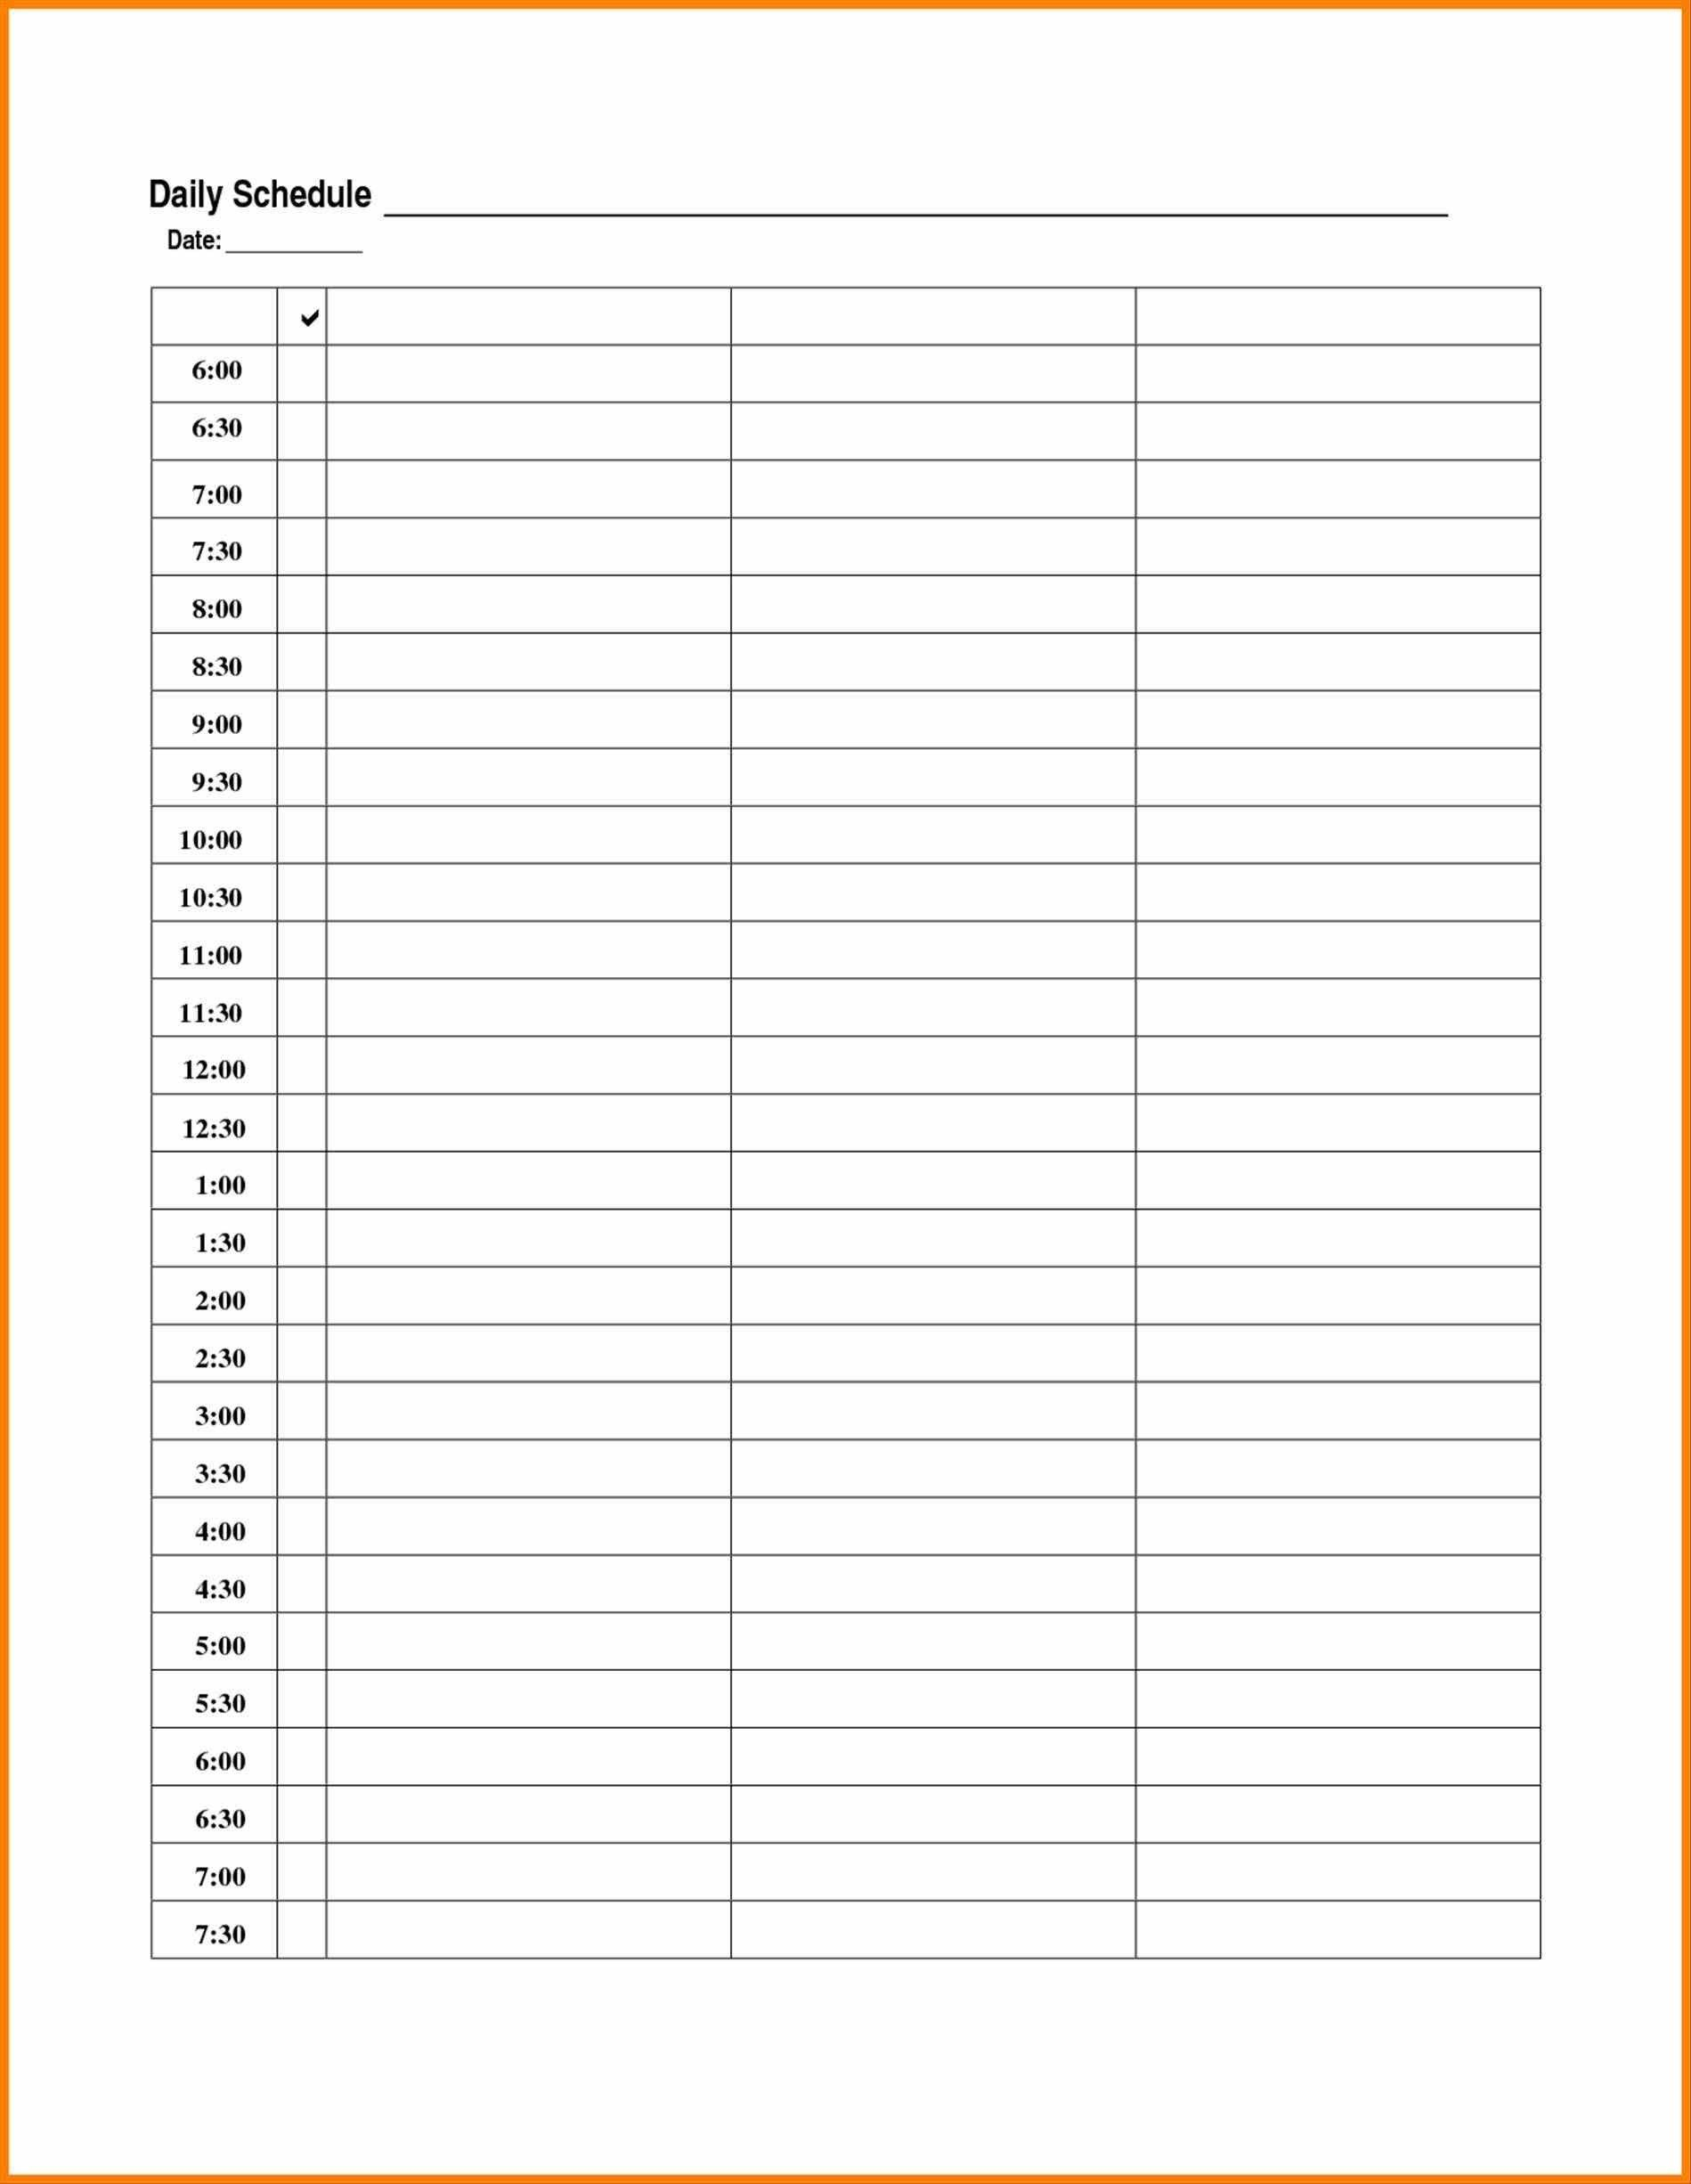 Excel Calendar Template 8.5 X 11 | Example Calendar Printable inside Excel Quarterly Calendar Template